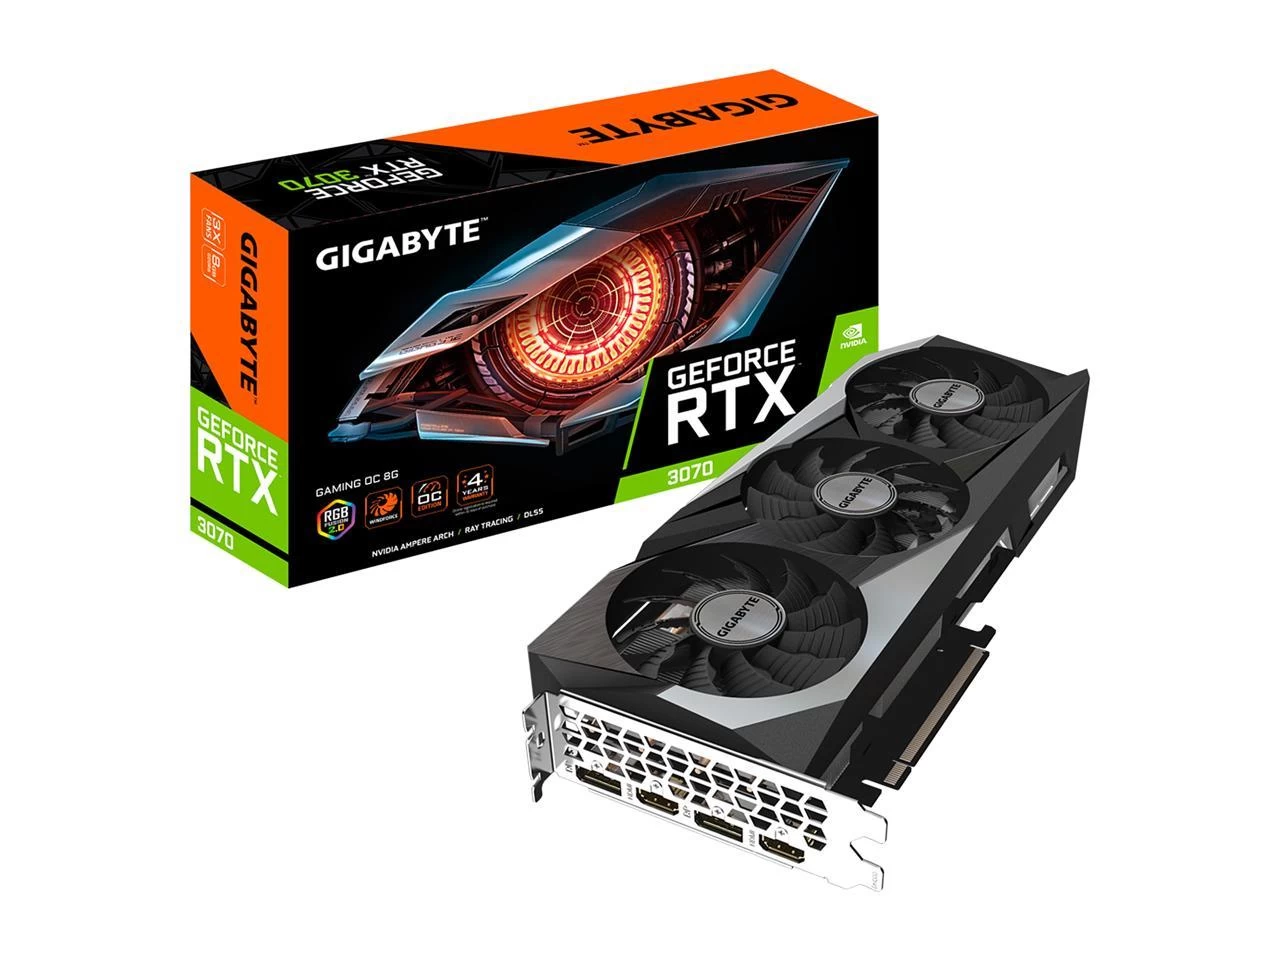 GIGABYTE GeForce RTX 3070 GAMING OC 8G Package